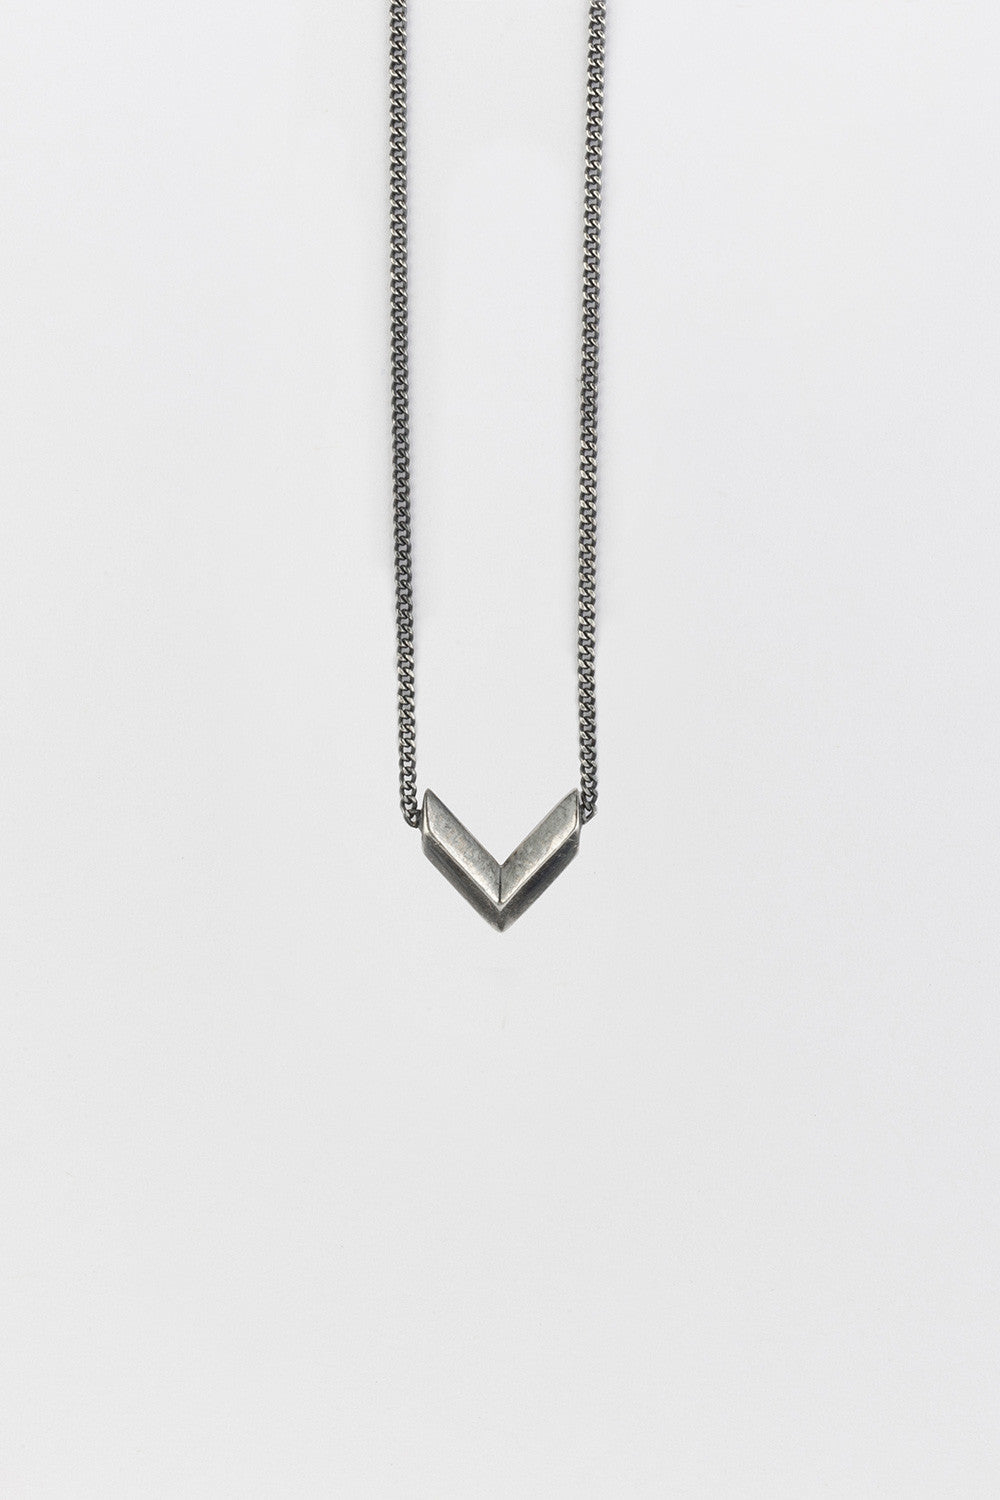 Fang (V) Necklace Antique Silver